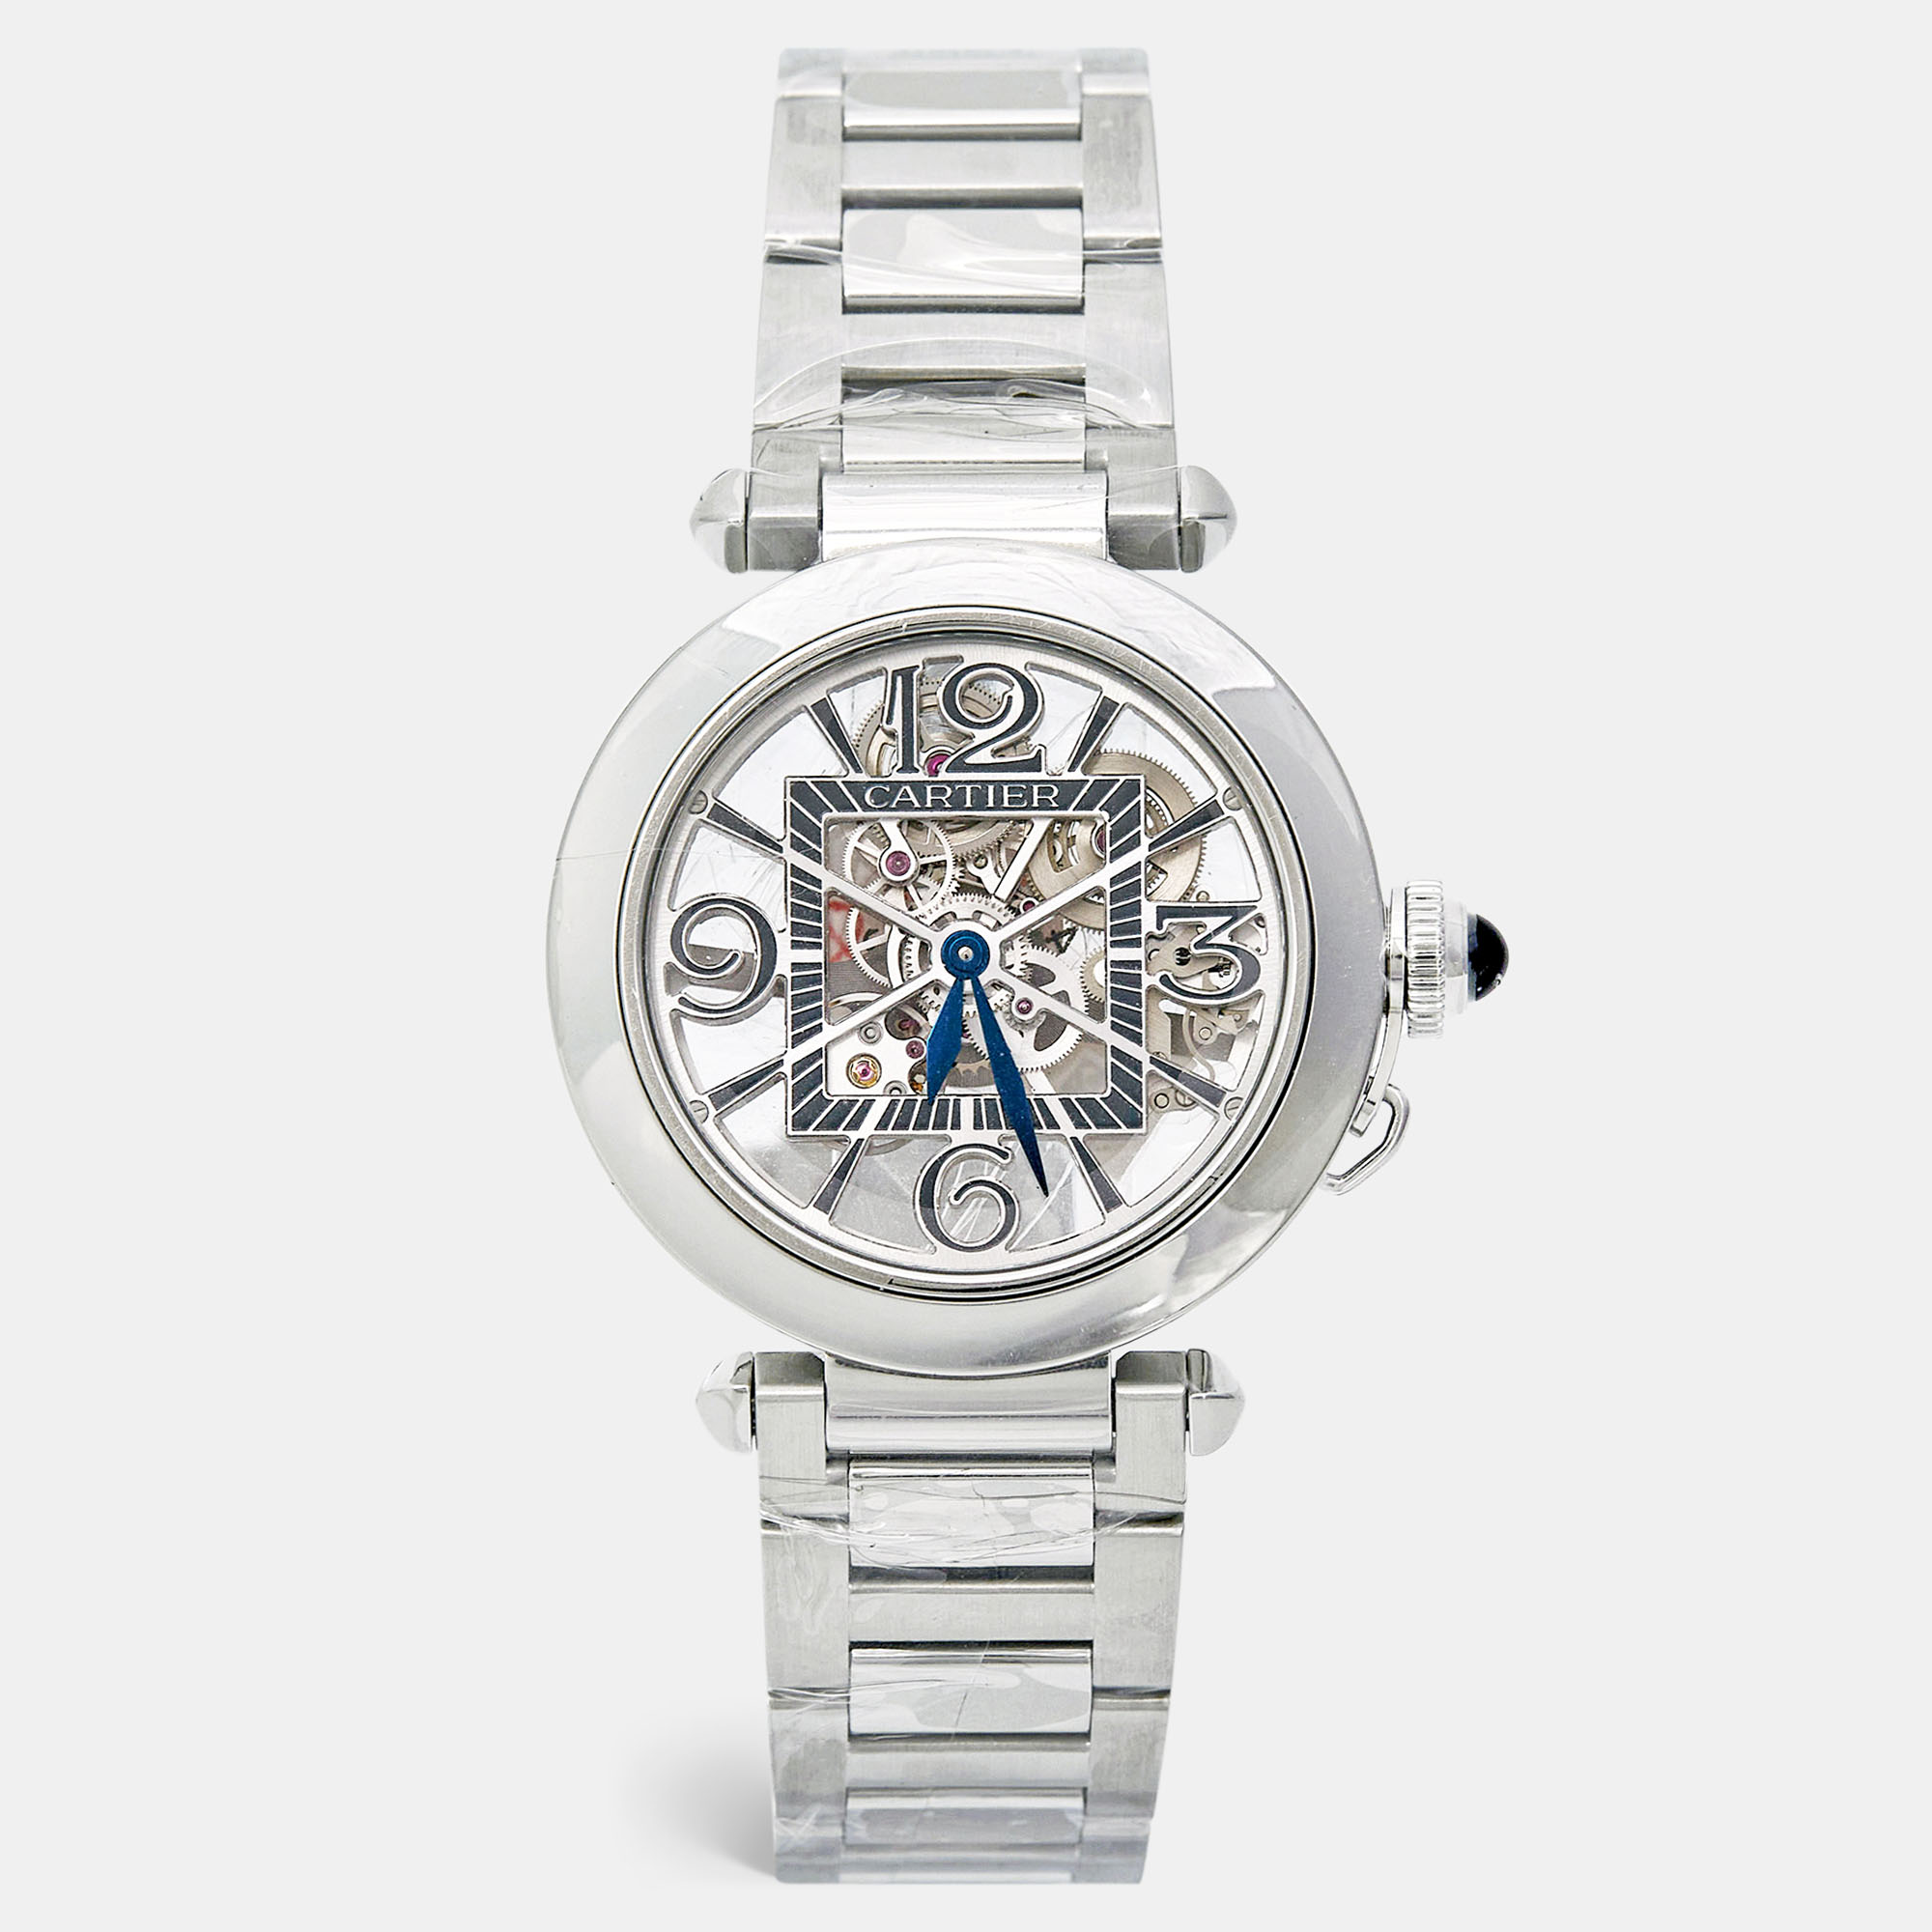 Cartier pasha de cartier stainless steel cartier automatic skeleton whpa0007 men's watch 41 mm